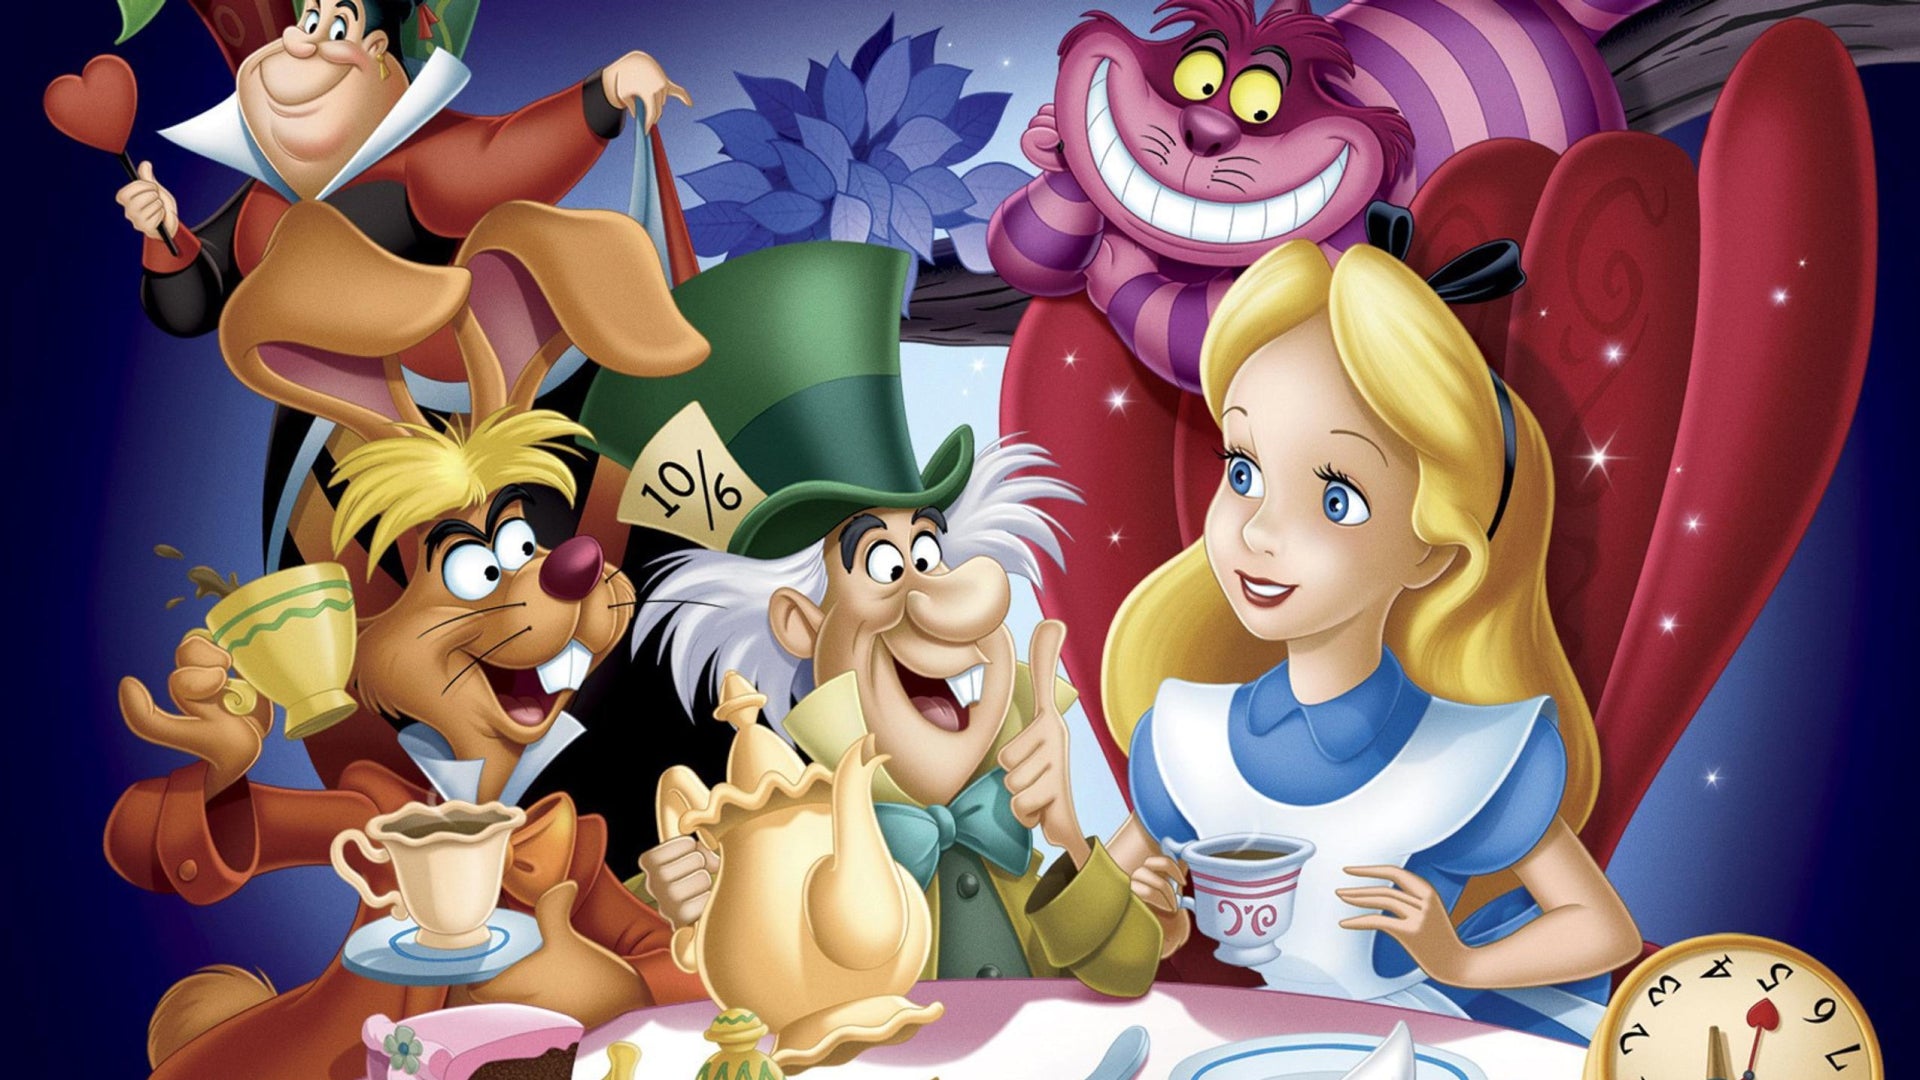 Disney's Alice In Wonderland - Limited Edition Collectible SteelBook